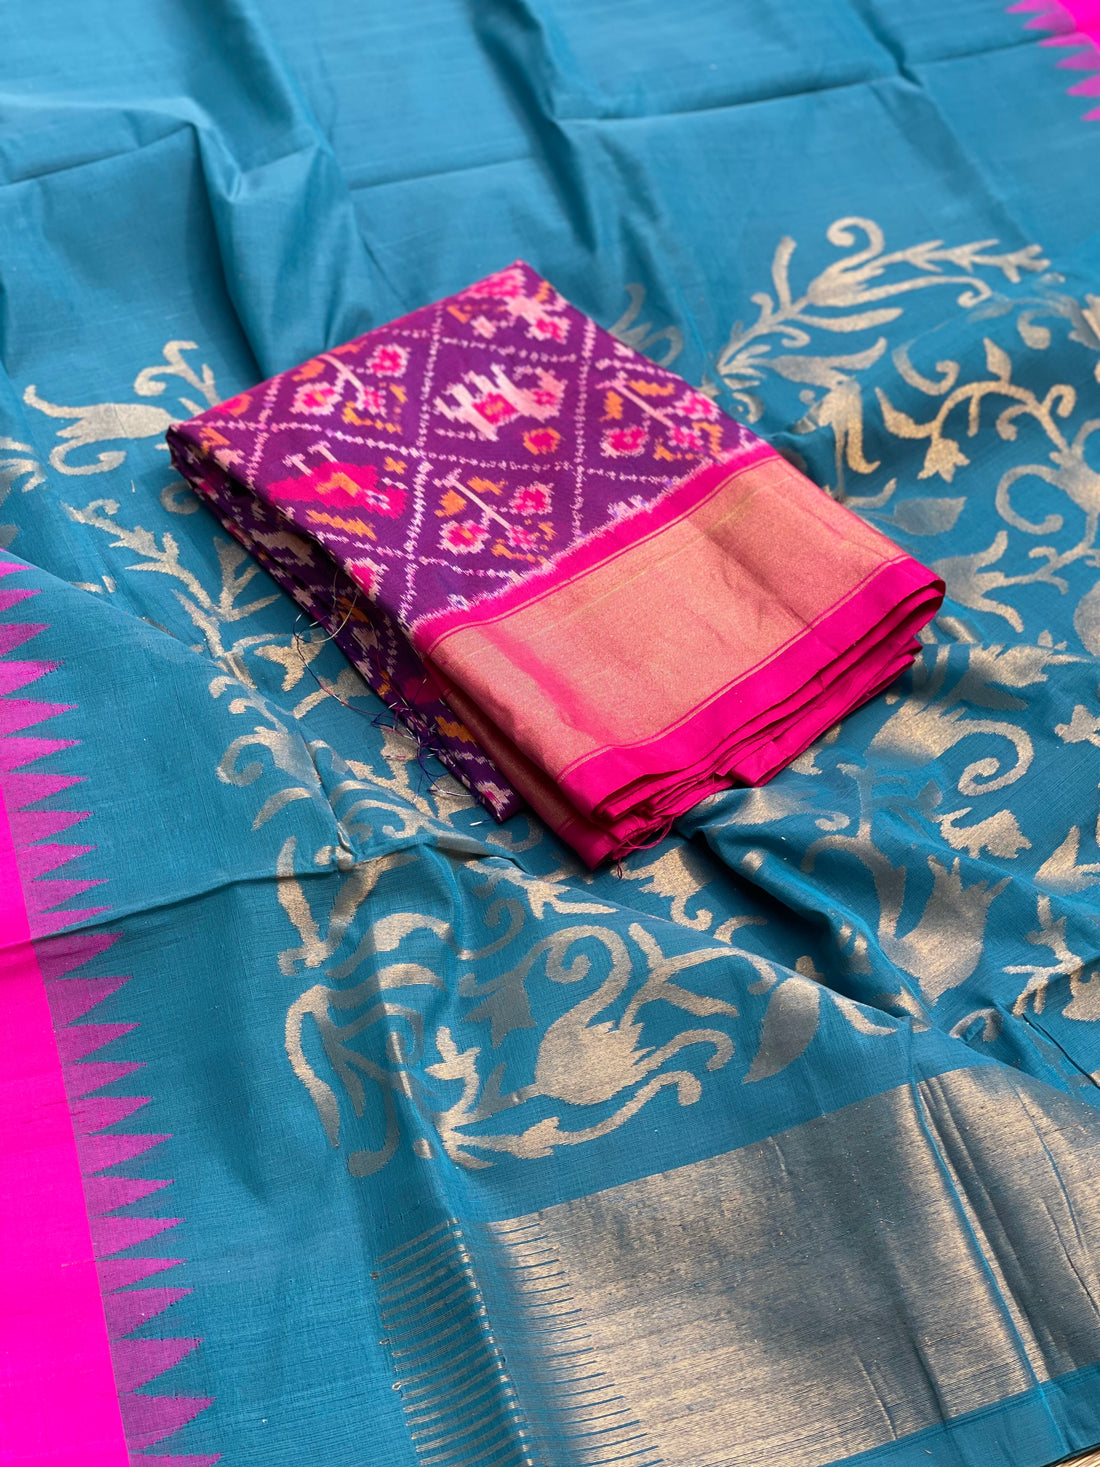 Teal Peacock blue with pink Ponduru khadi Jamdani cotton saree